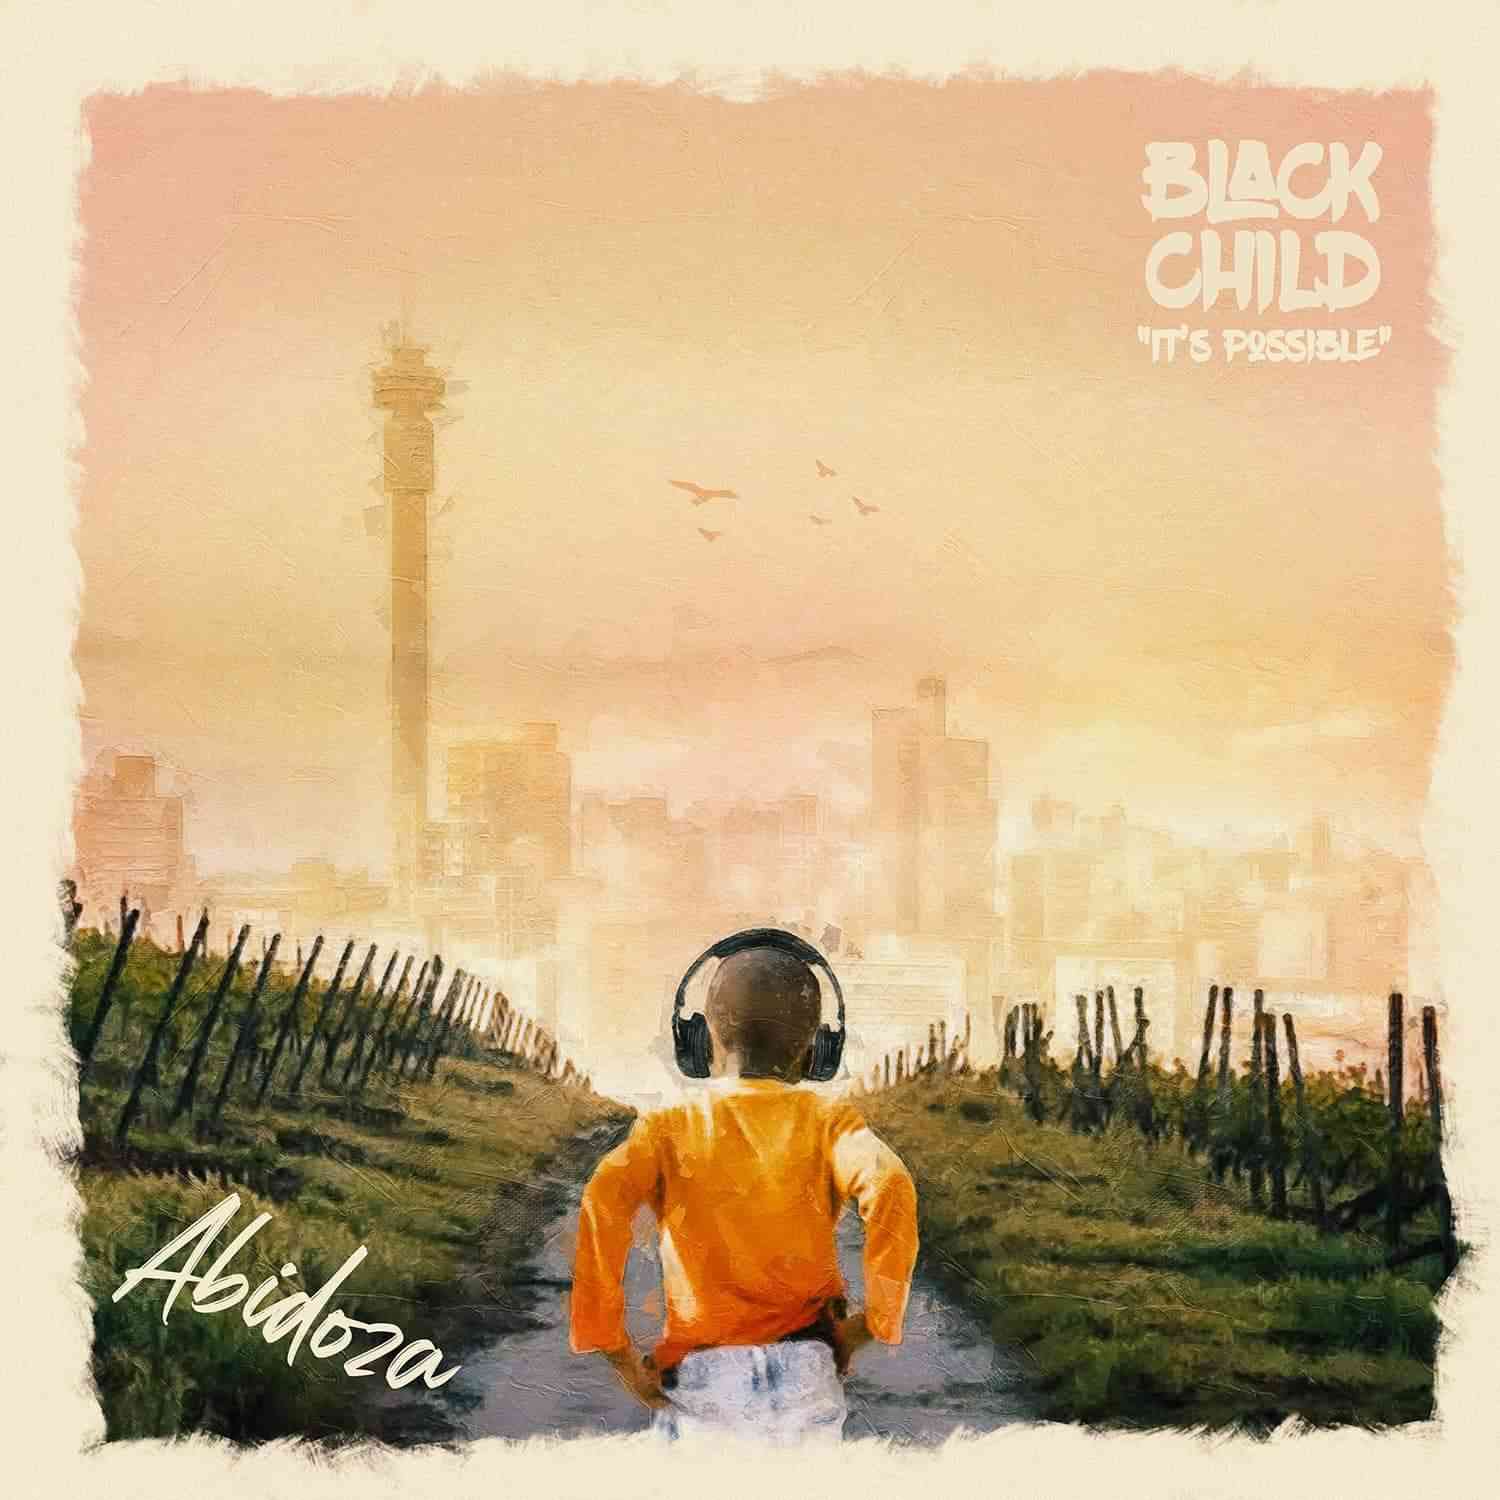 Black Child: Abidoza Reveals Artwork & Pre-order Link For Next Project